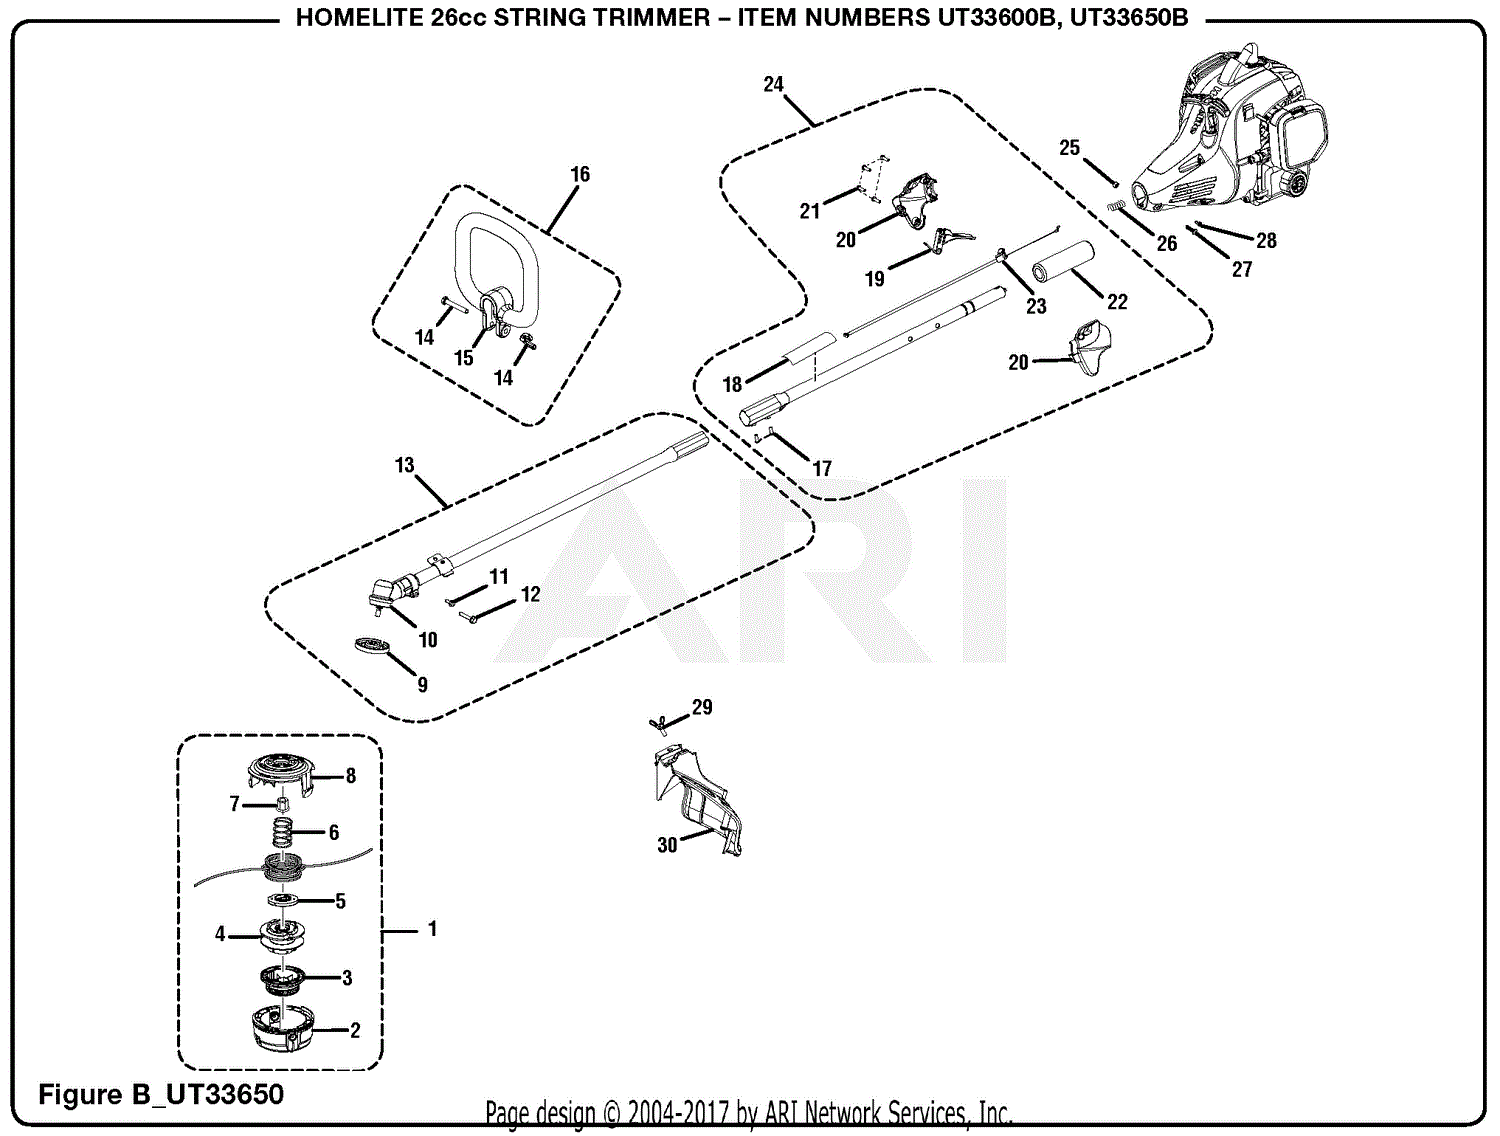 https://az417944.vo.msecnd.net/diagrams/manufacturer/green-machine/homelite/string-trimmers/ut33650b-26cc-string-trimmer-mfg-no-090330018-12-18-18-rev-04/figure-b/diagram.gif